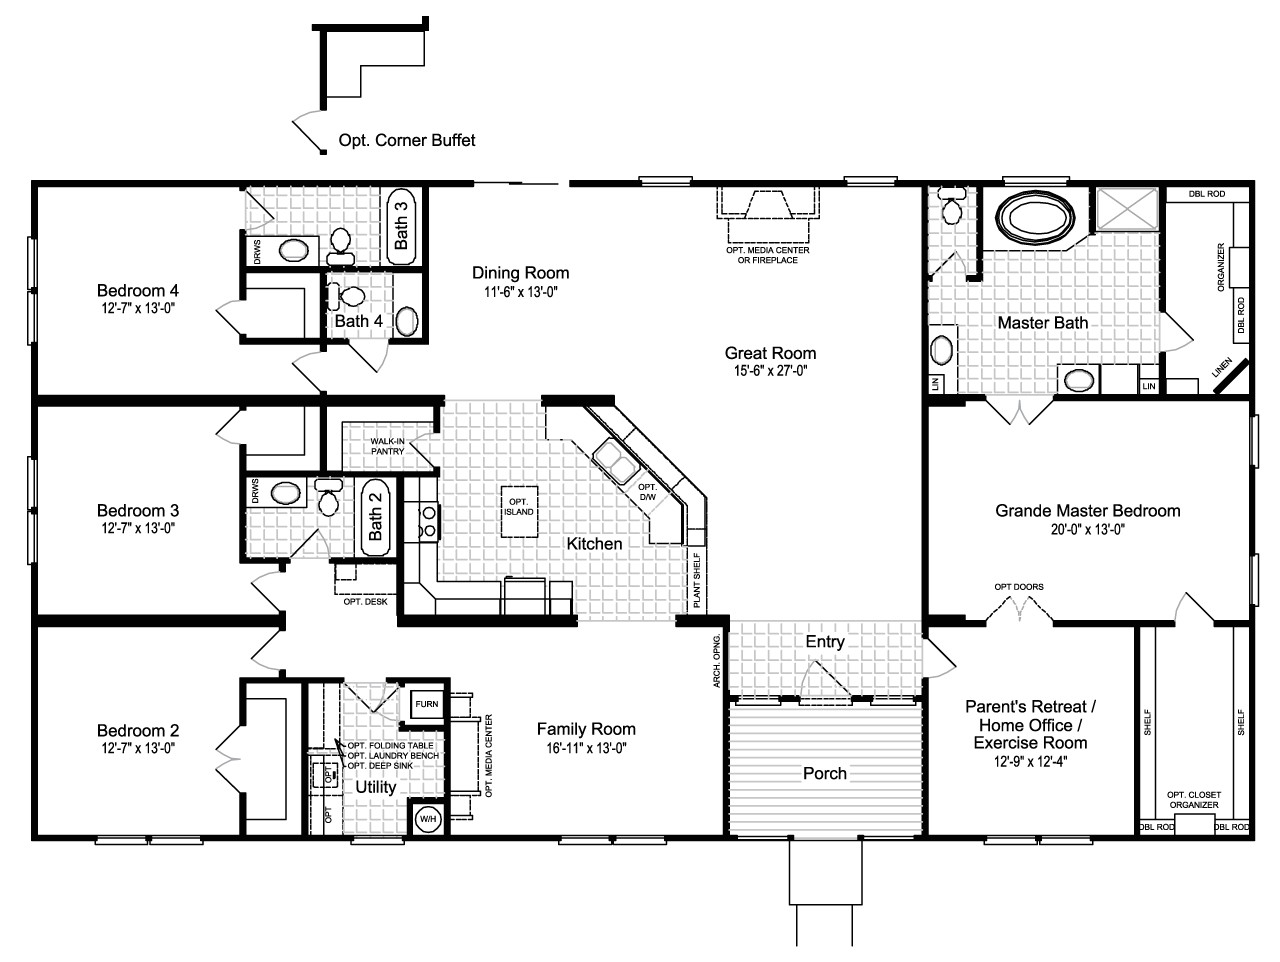 Home Floor Plan the Hacienda Iii 41764a Manufactured Home Floor Plan or